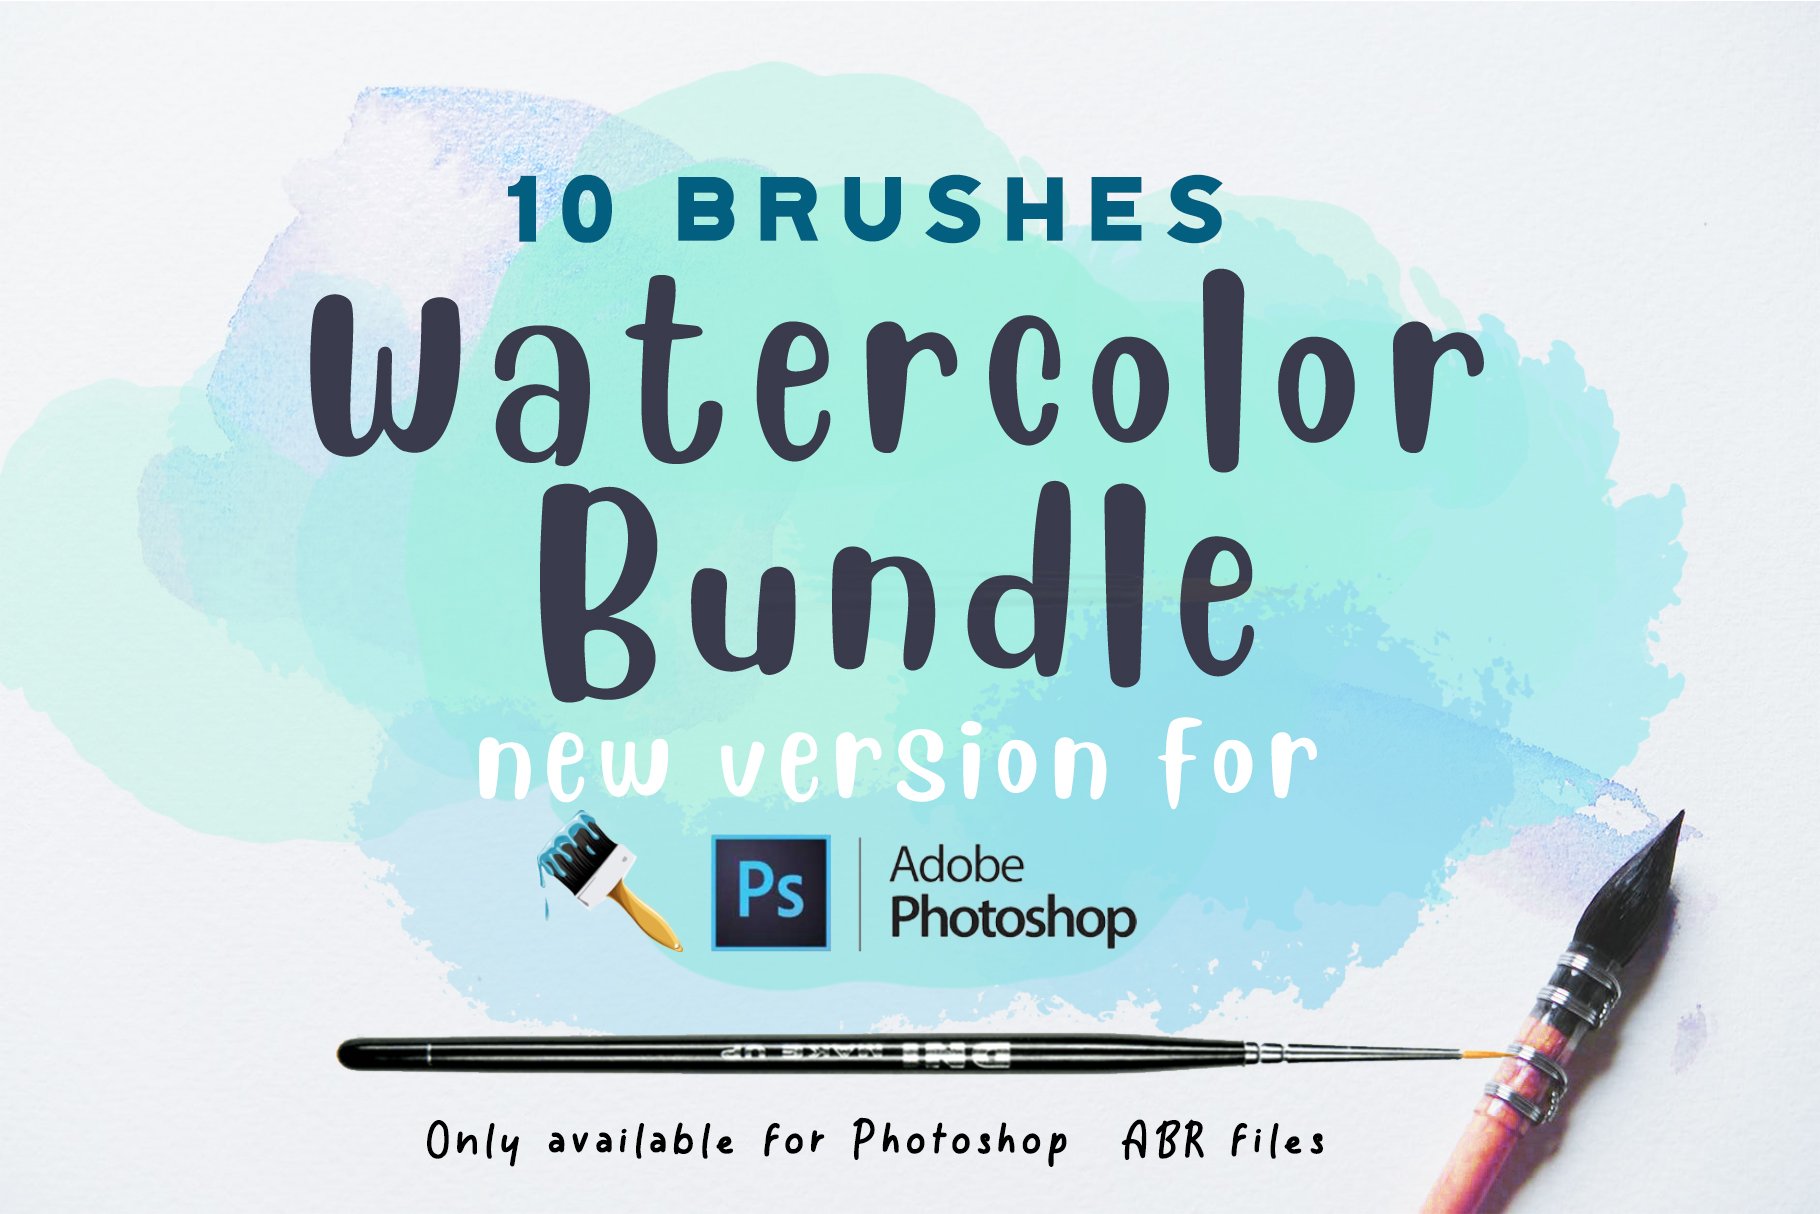 Watercolor bundle Photoshop Brushescover image.